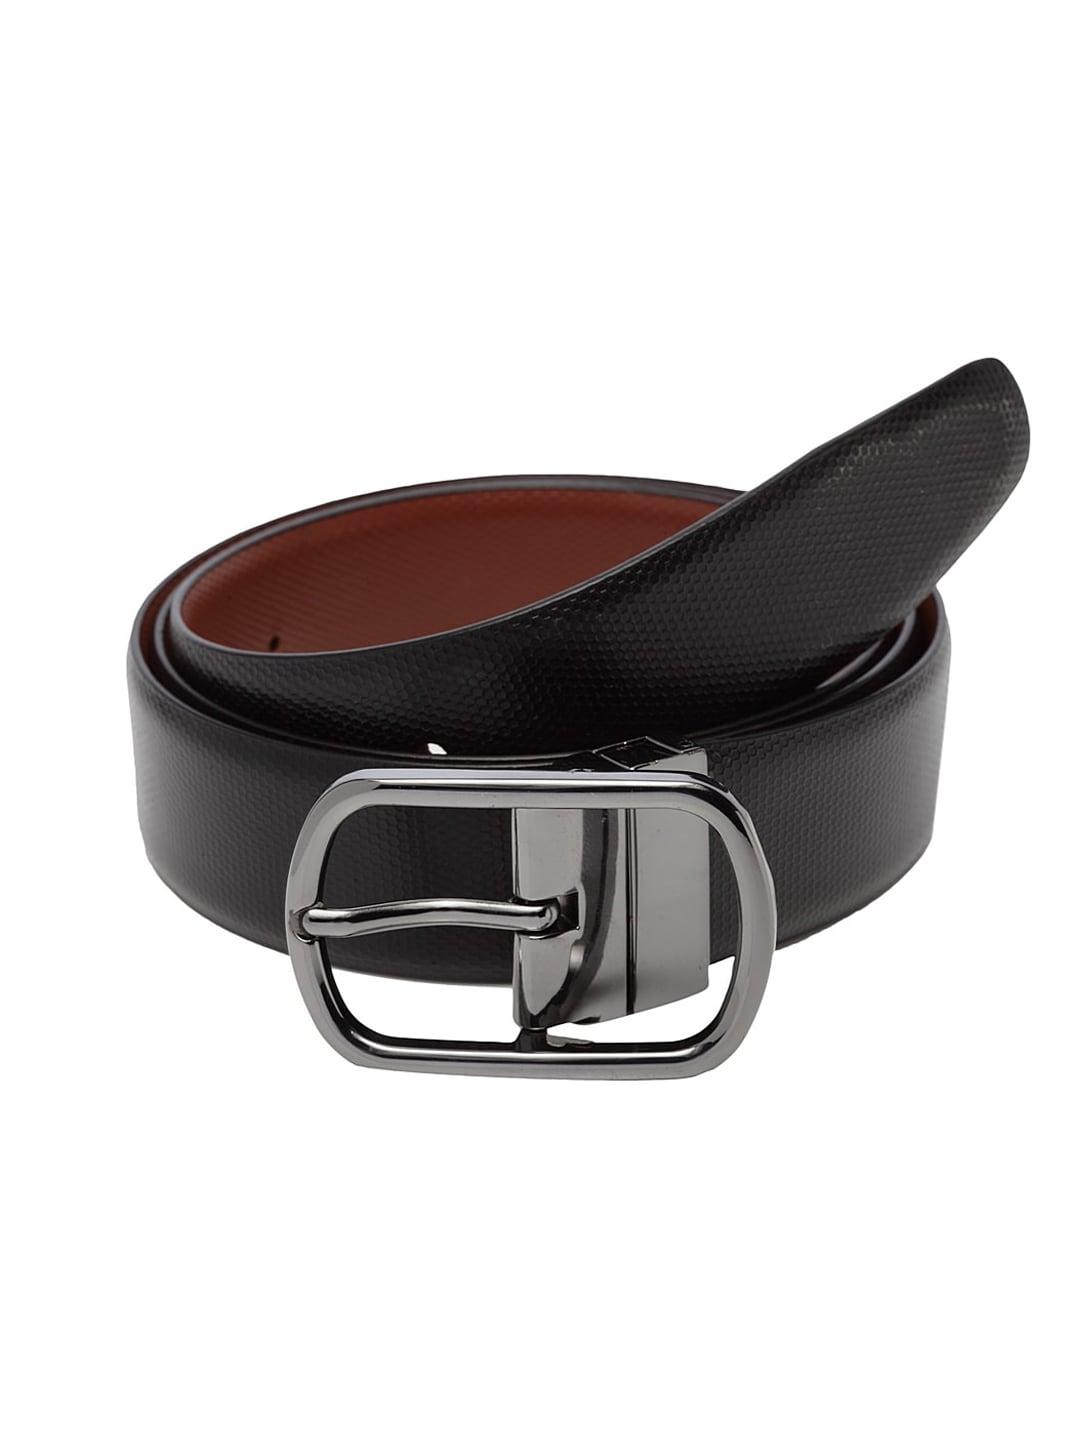 WELBAWT Men Black & Brown Textured Leather Reversible Slim Belt